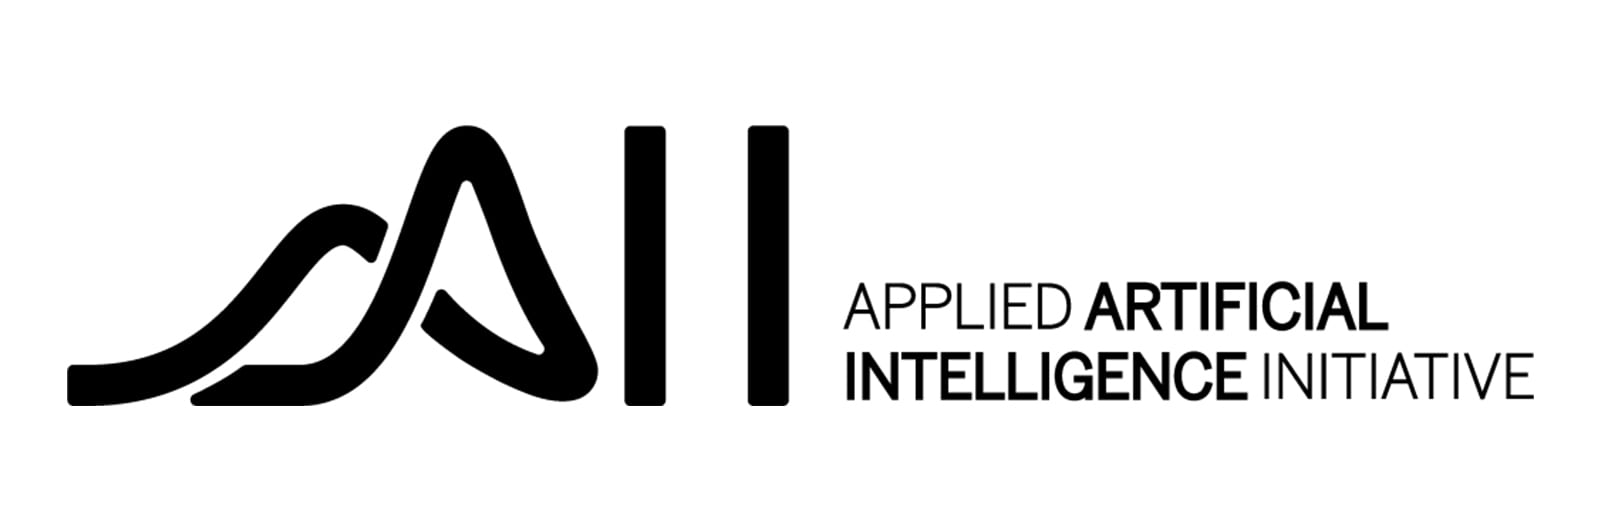 Applied Artificial Intelligence Initiative (AAII)